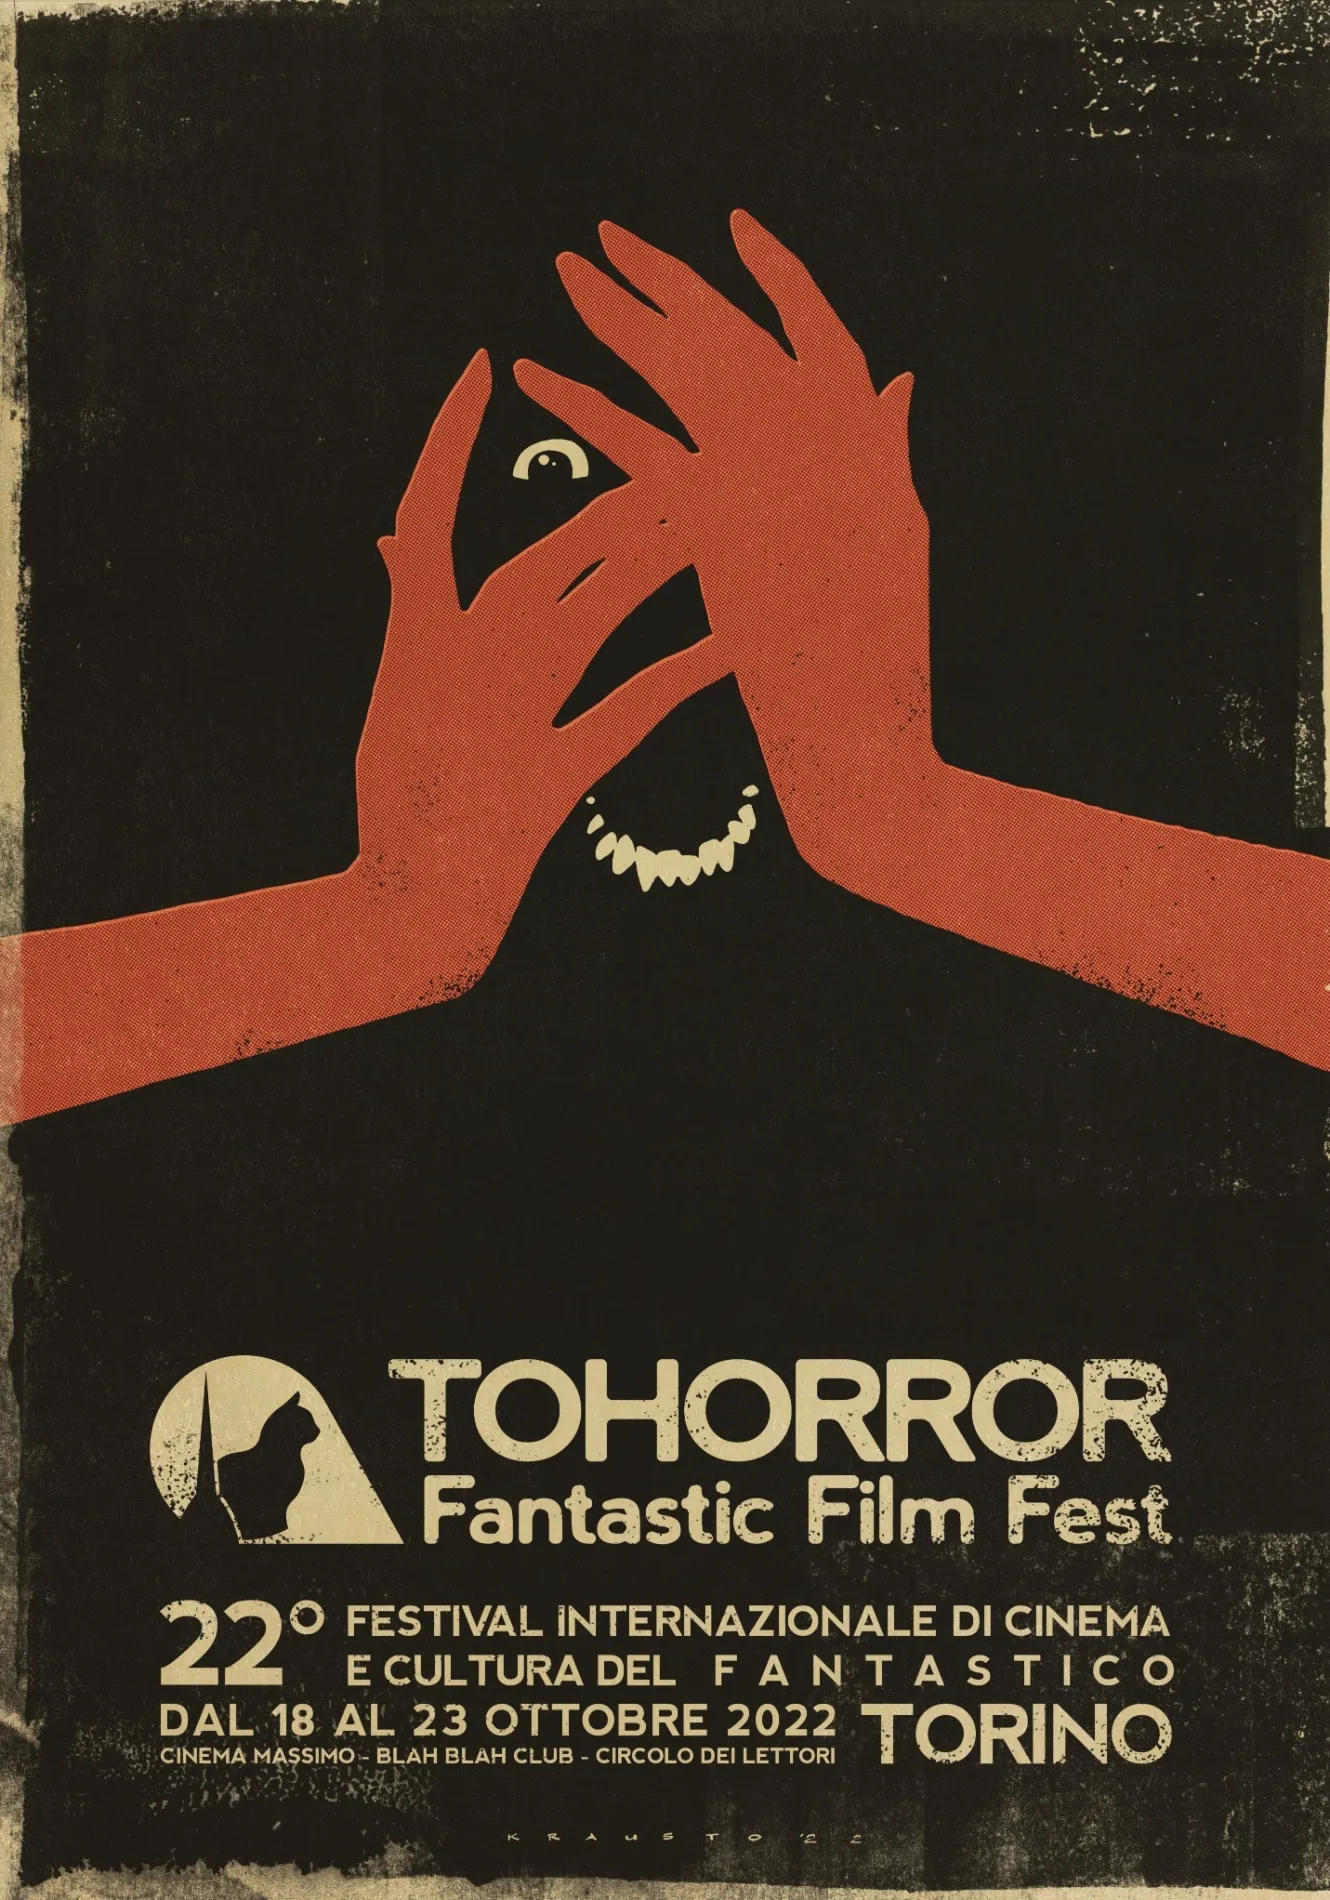 [NEWS] I primi film in programma al ToHorror Fantastic Film Fest